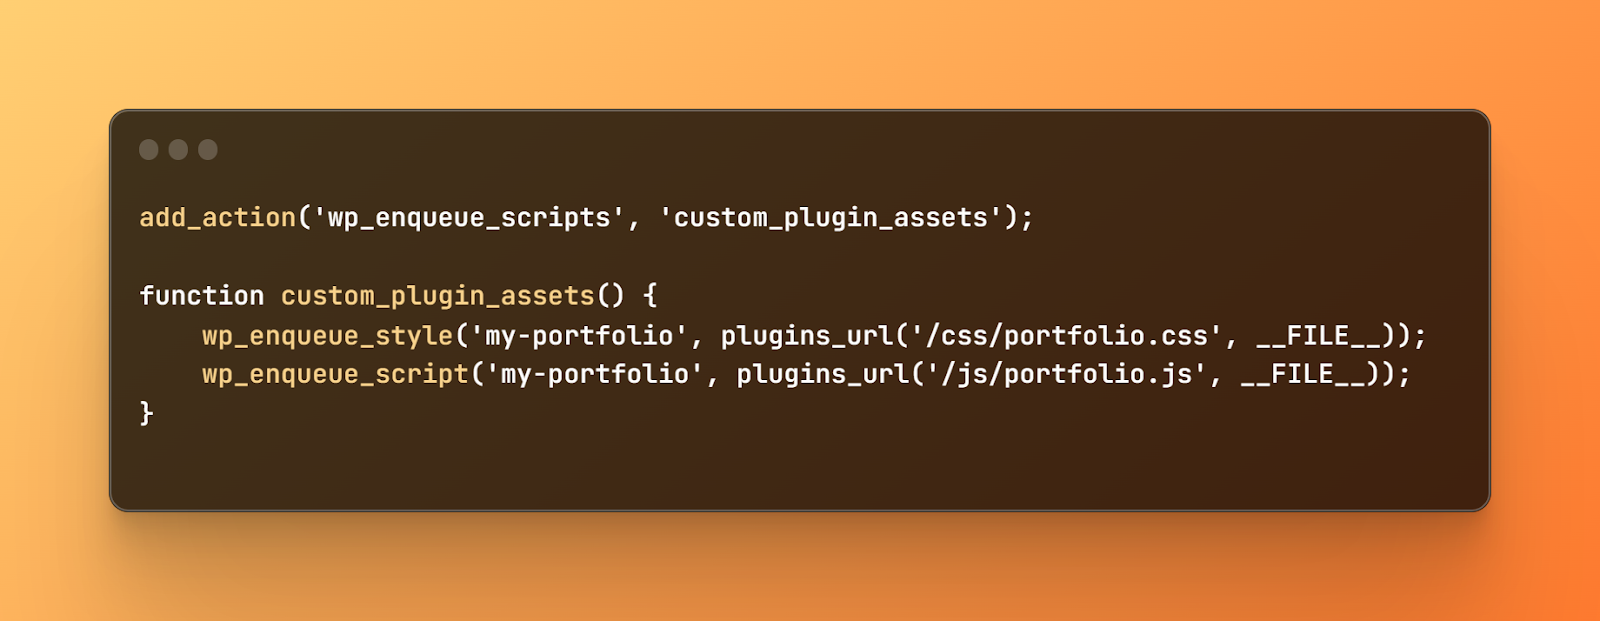 wp_enqueue_script code, add_action('wp_enqueue_scripts', 'custom_plugin_assets'); function custom_plugin_assets() {    wp_enqueue_style('my-portfolio' plugins_url('/css/portfolio.css', __FILE__));    wp_enqueue_script('my-portfolio', plugins_url('/js/portfolio.js', __FILE__));}